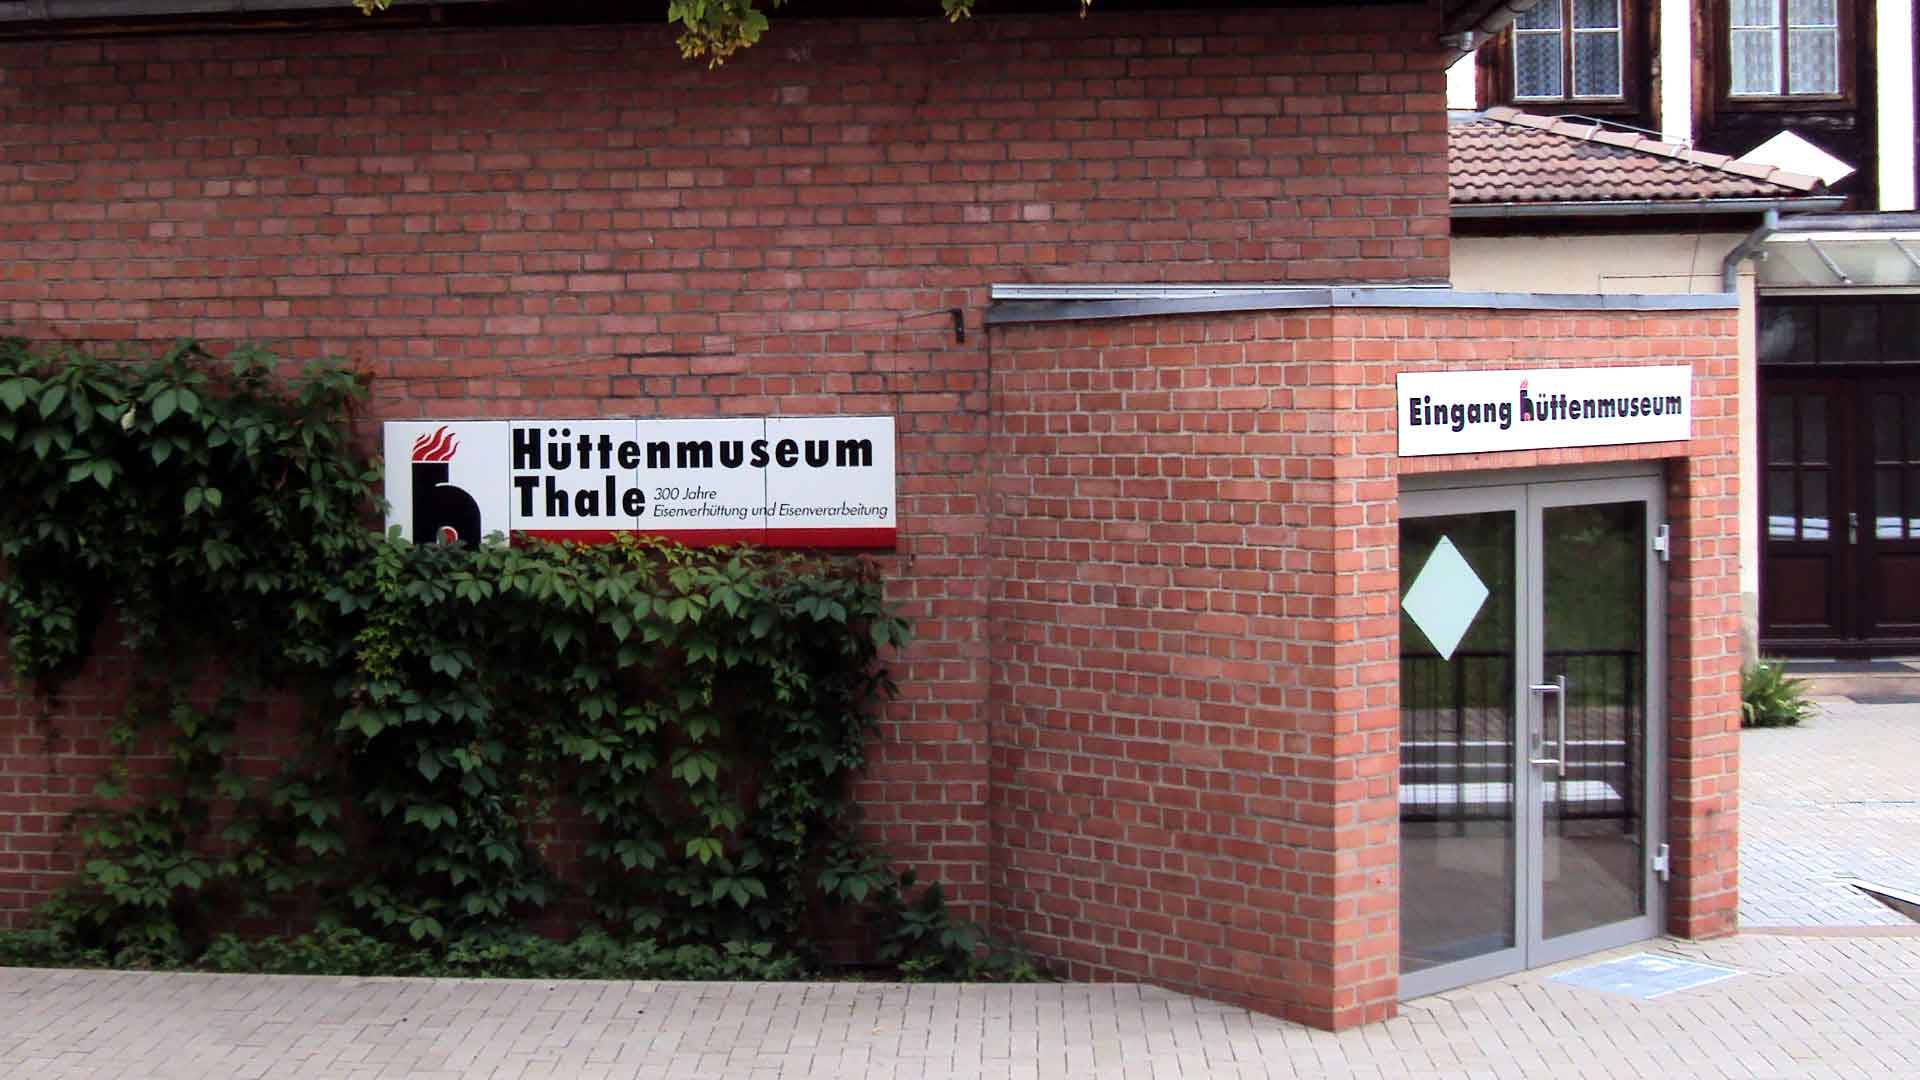 Hüttenmuseum Thale - Eingang